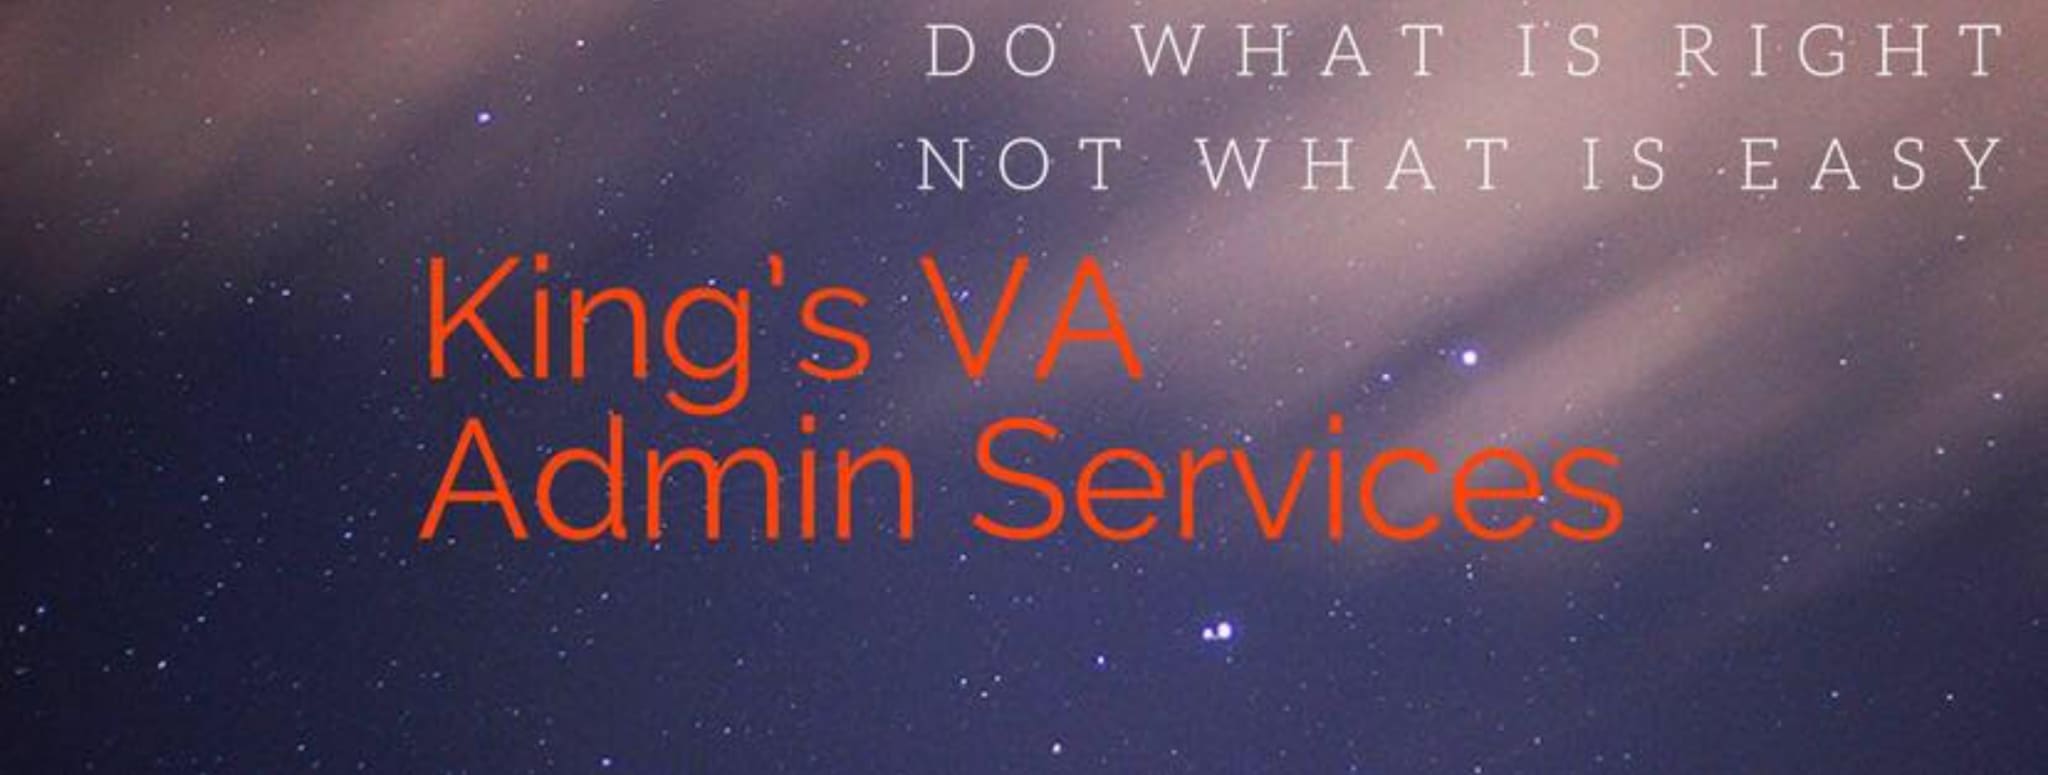 King’s VA Admin Services